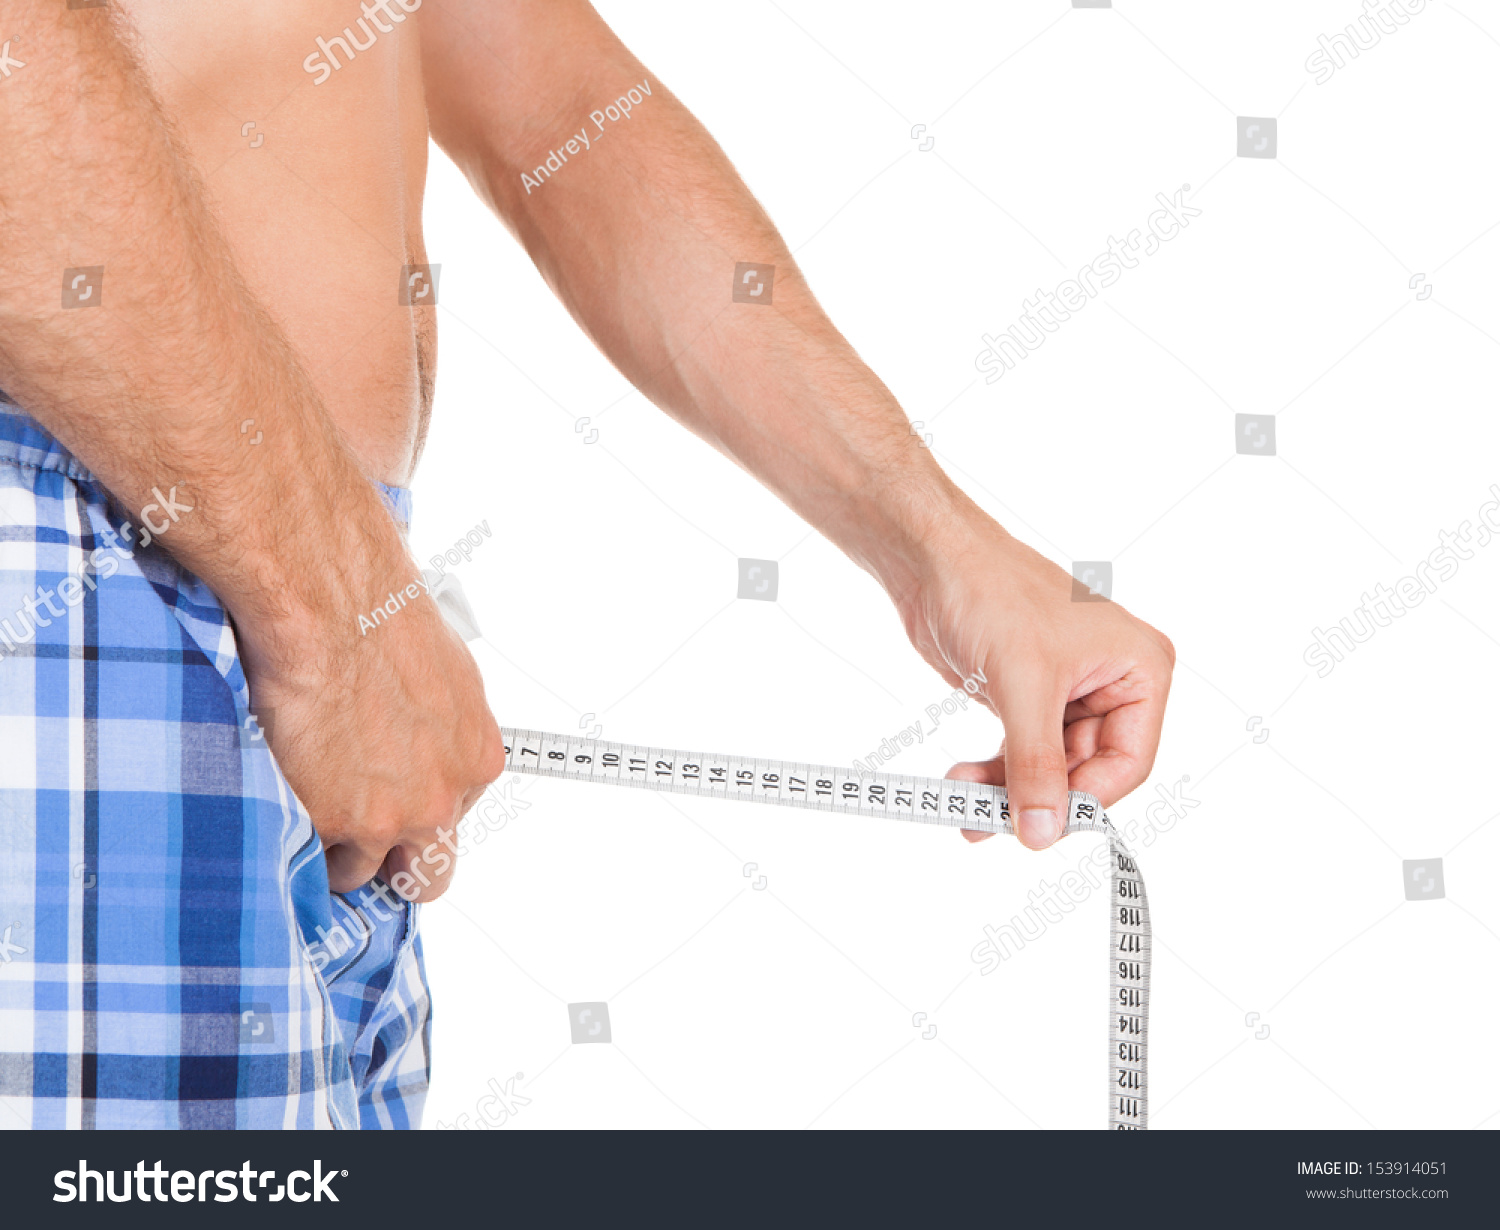 Measuring His Penis 35